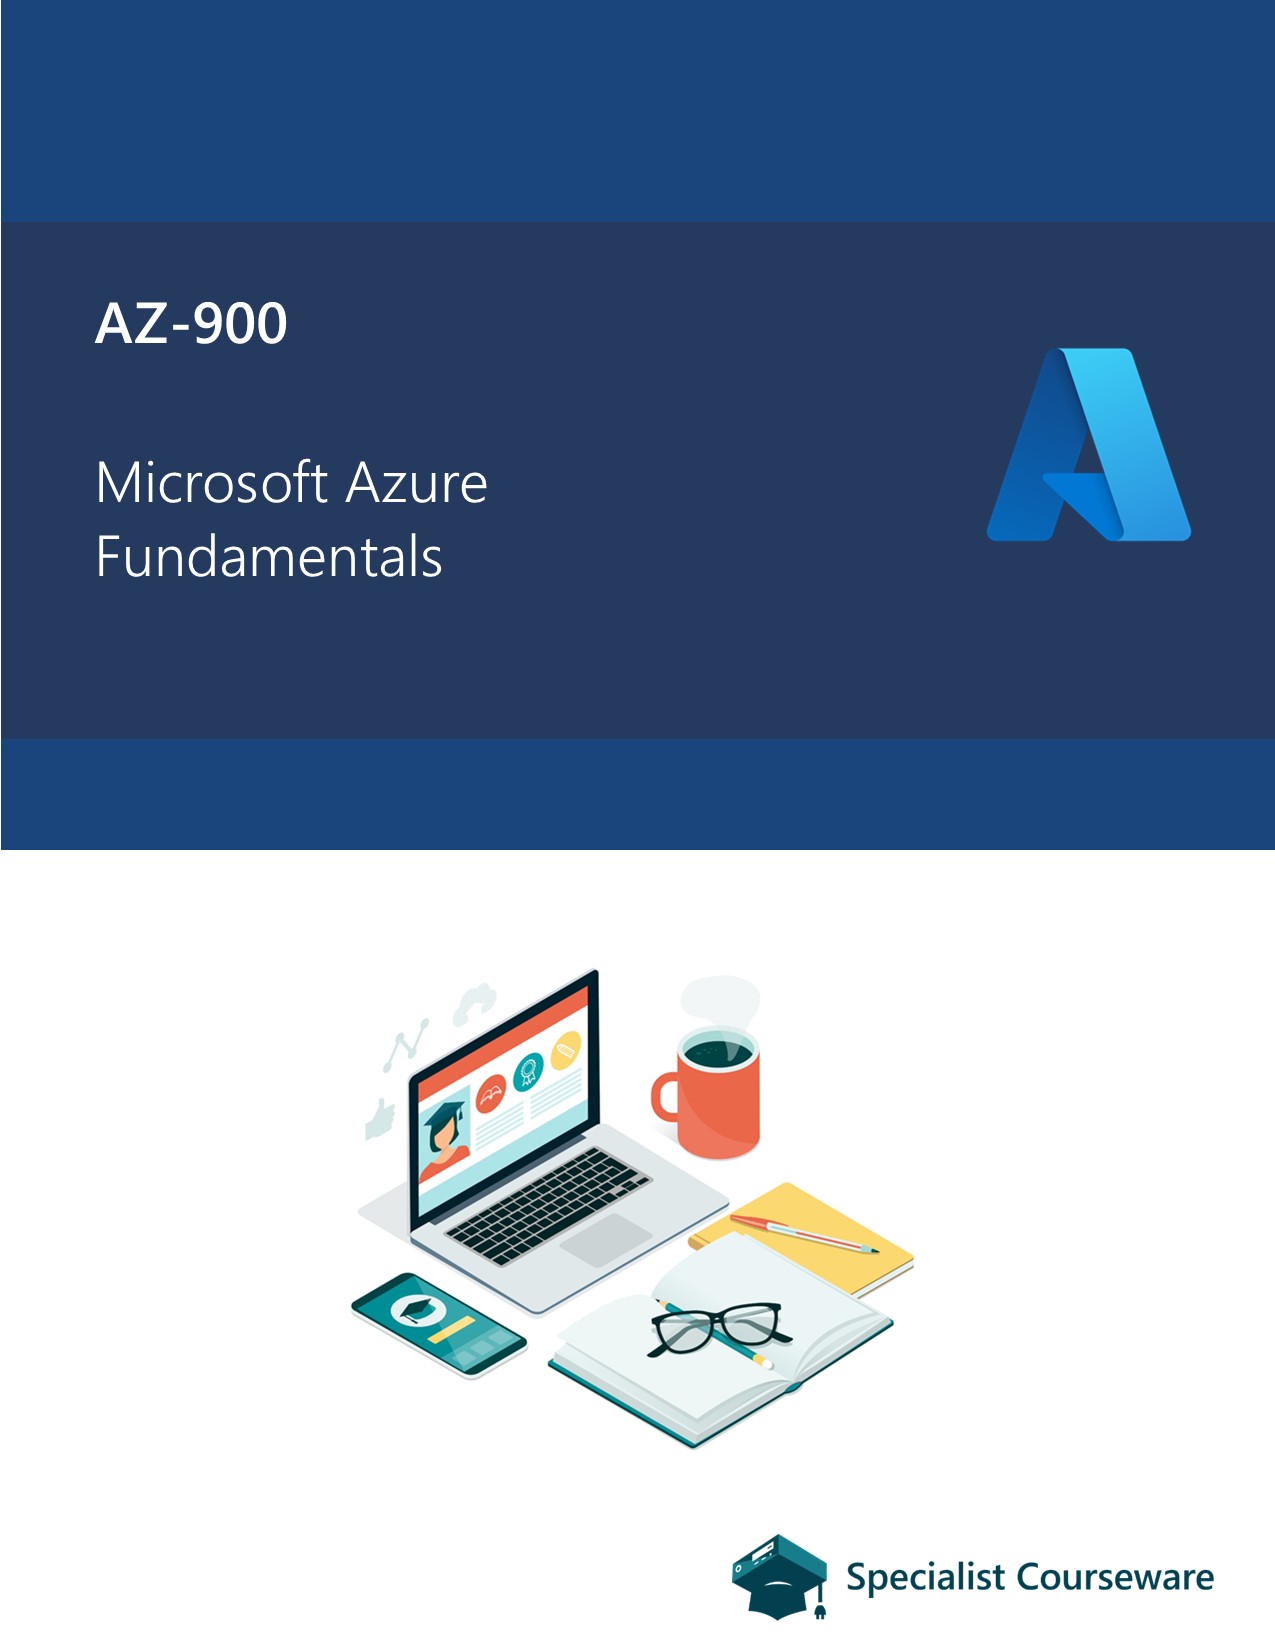 AZ-900 Microsoft Azure Fundamentals (Aligned Courseware)